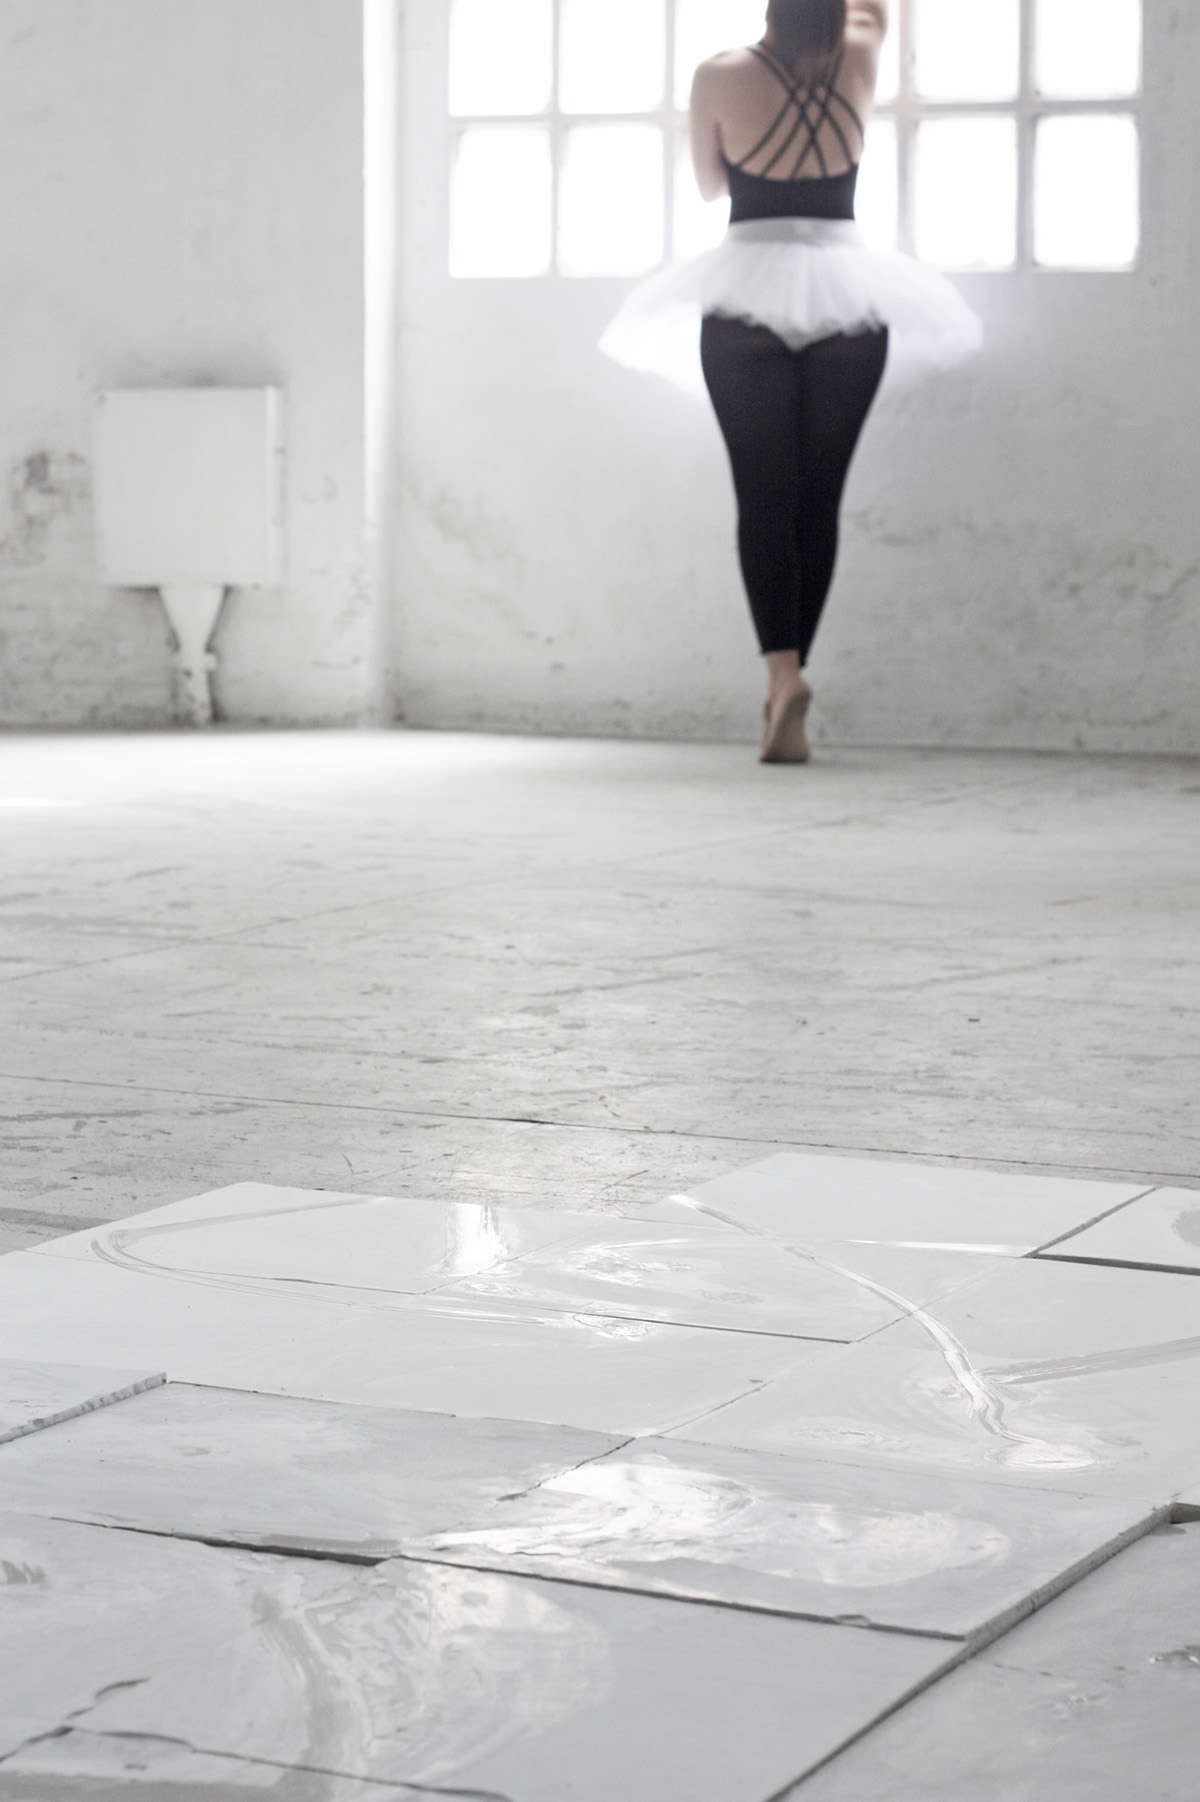  traces  ballet  tiles  salt DANCE   footprints signals symbols archi Expression dancer dancers beauty Choreo